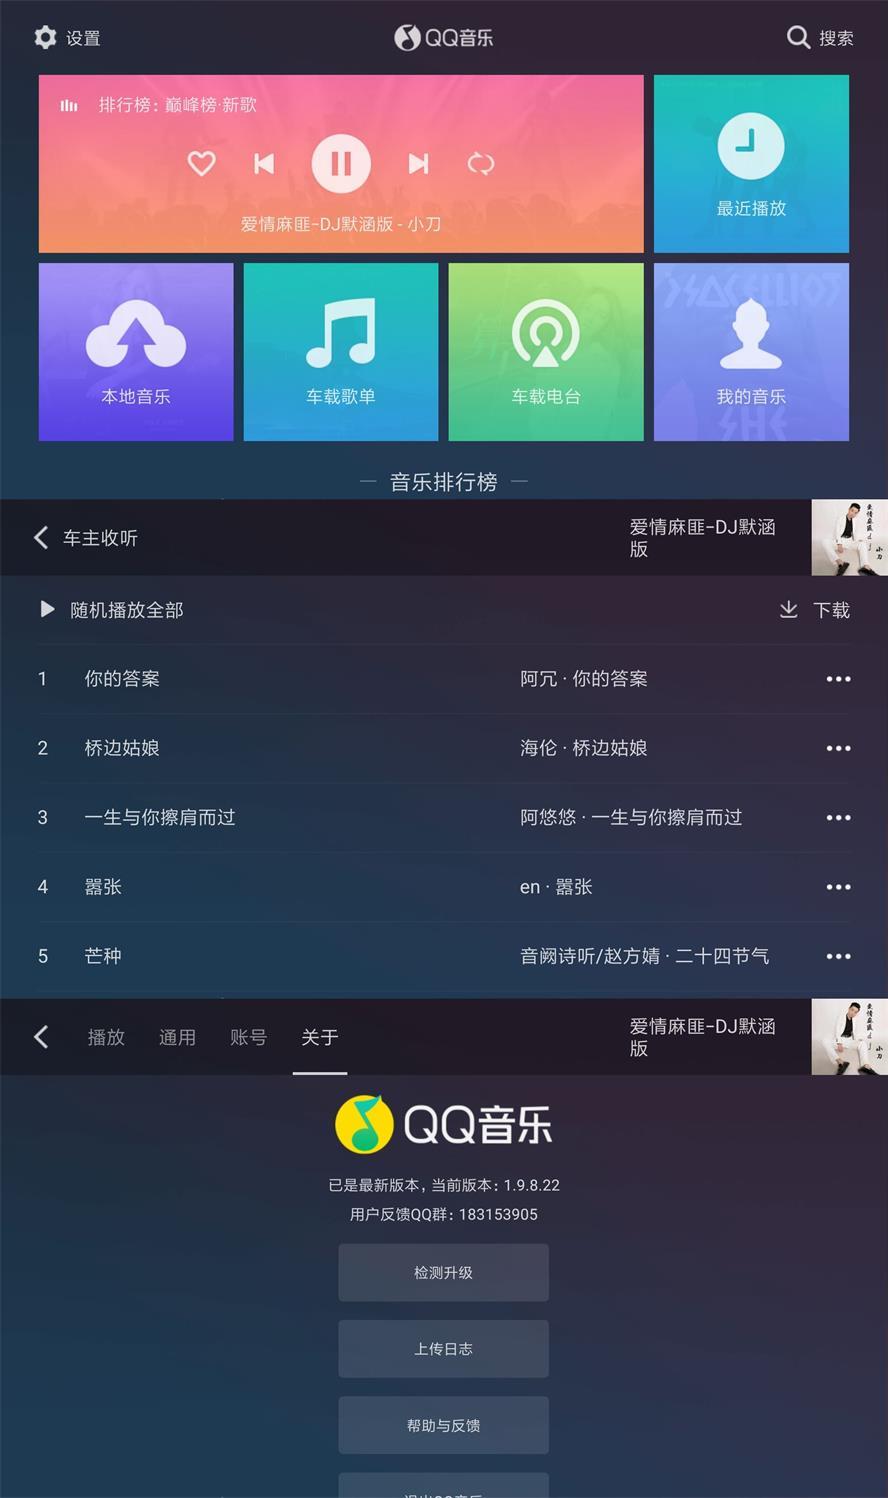 QQ音乐车机版v1.9.8.22纯净版-山海云端论坛